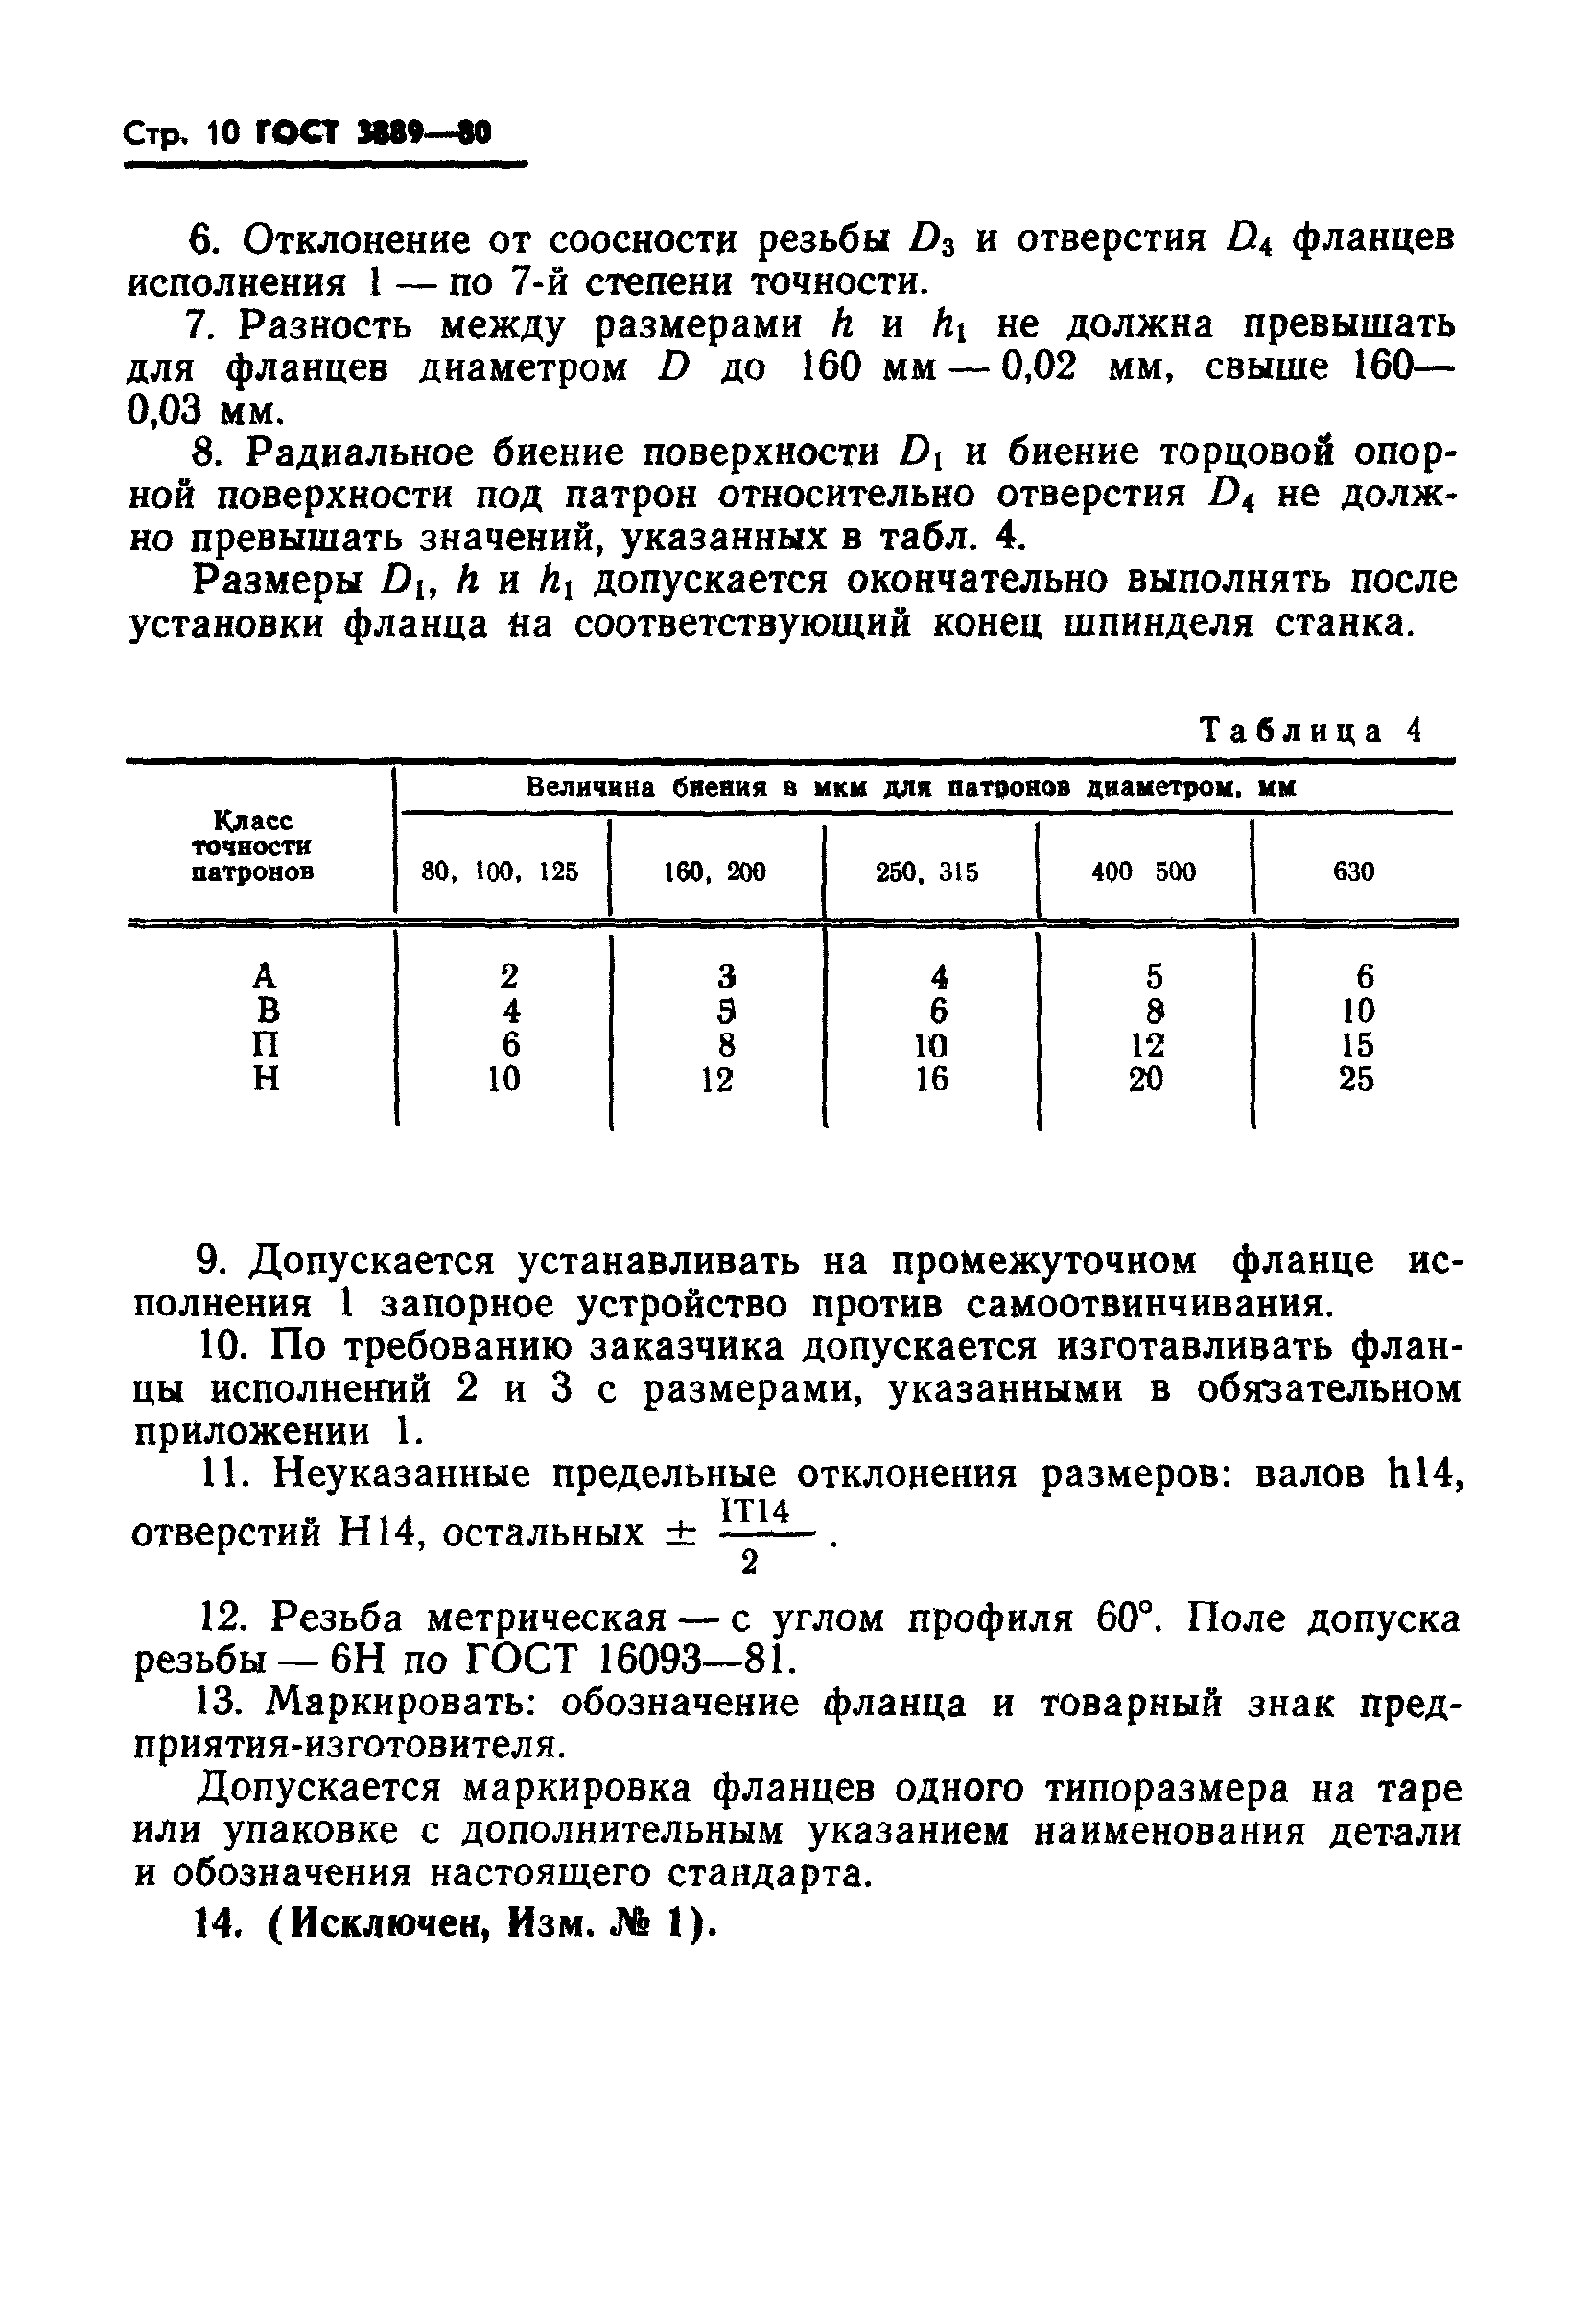 ГОСТ 3889-80